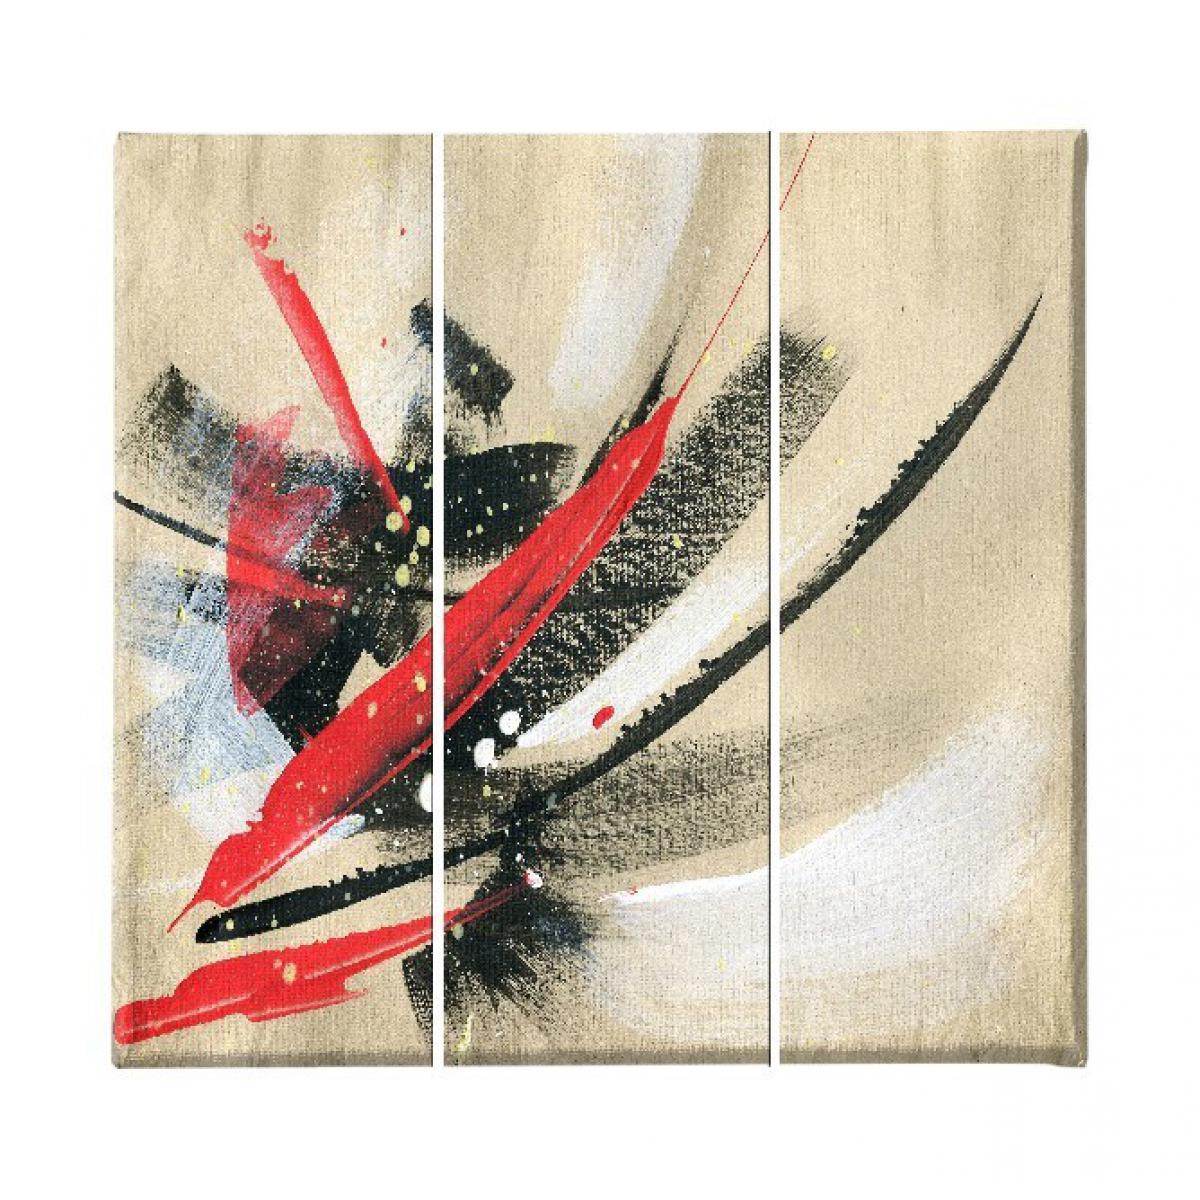 Homemania - HOMEMANIA Tableau Couleurs - 3 Pieces - Abstract - from Living Room, Room - Multicouleur en Polyester, Bois, 69 x 3 x 50 cm - Tableaux, peintures